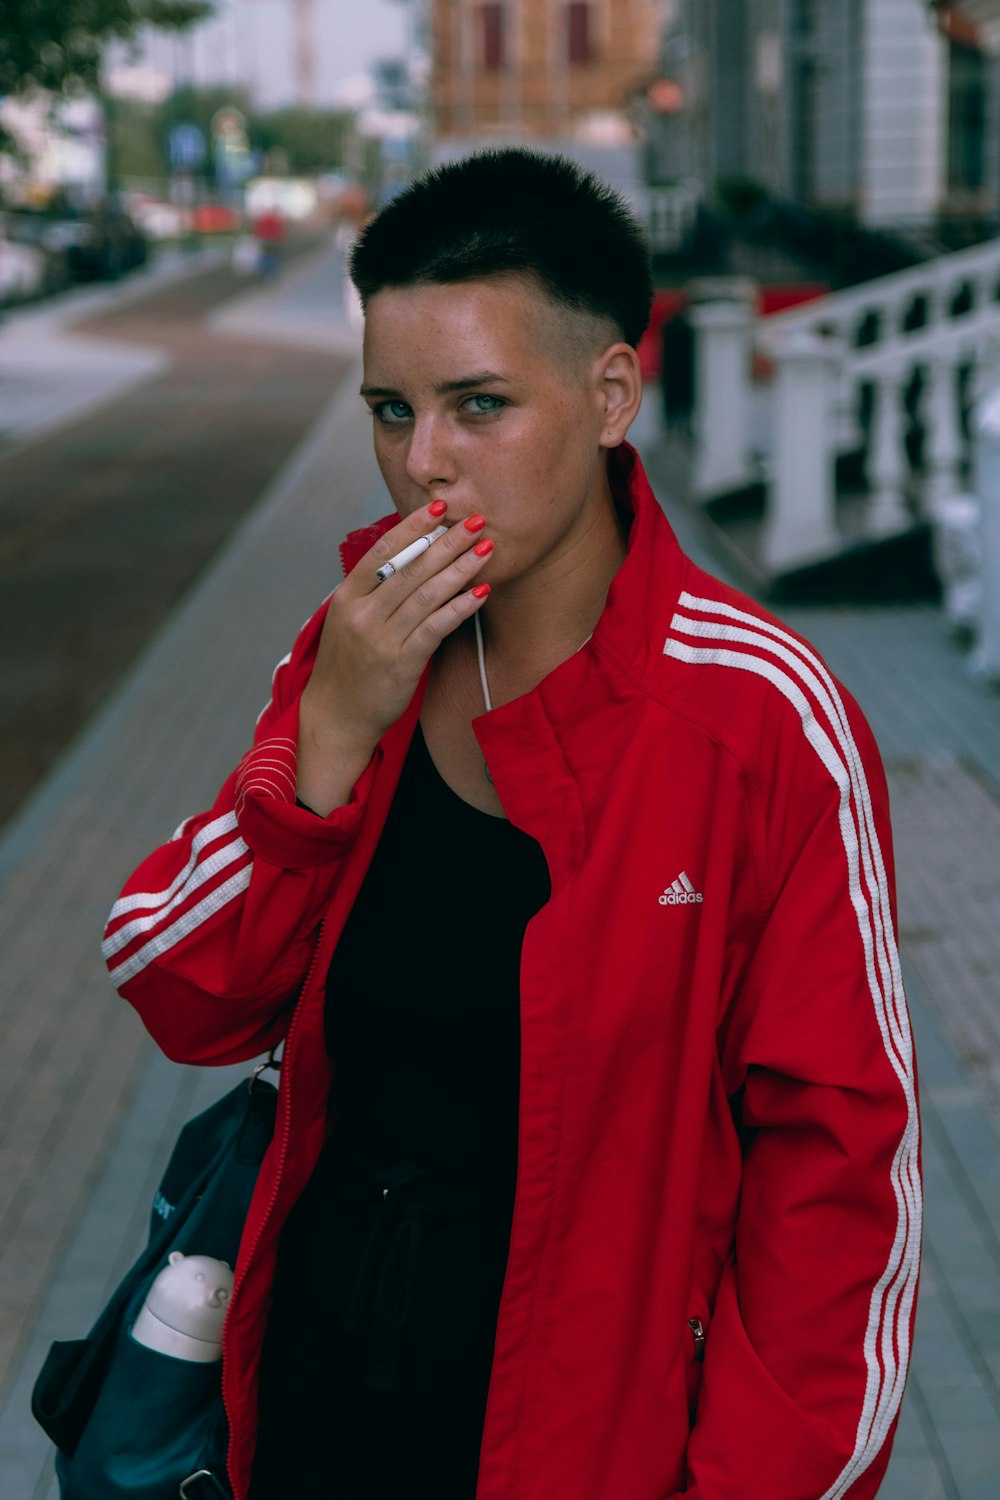 Man in red and white adidas zip up jacket photo – Free Smoking Image on  Unsplash